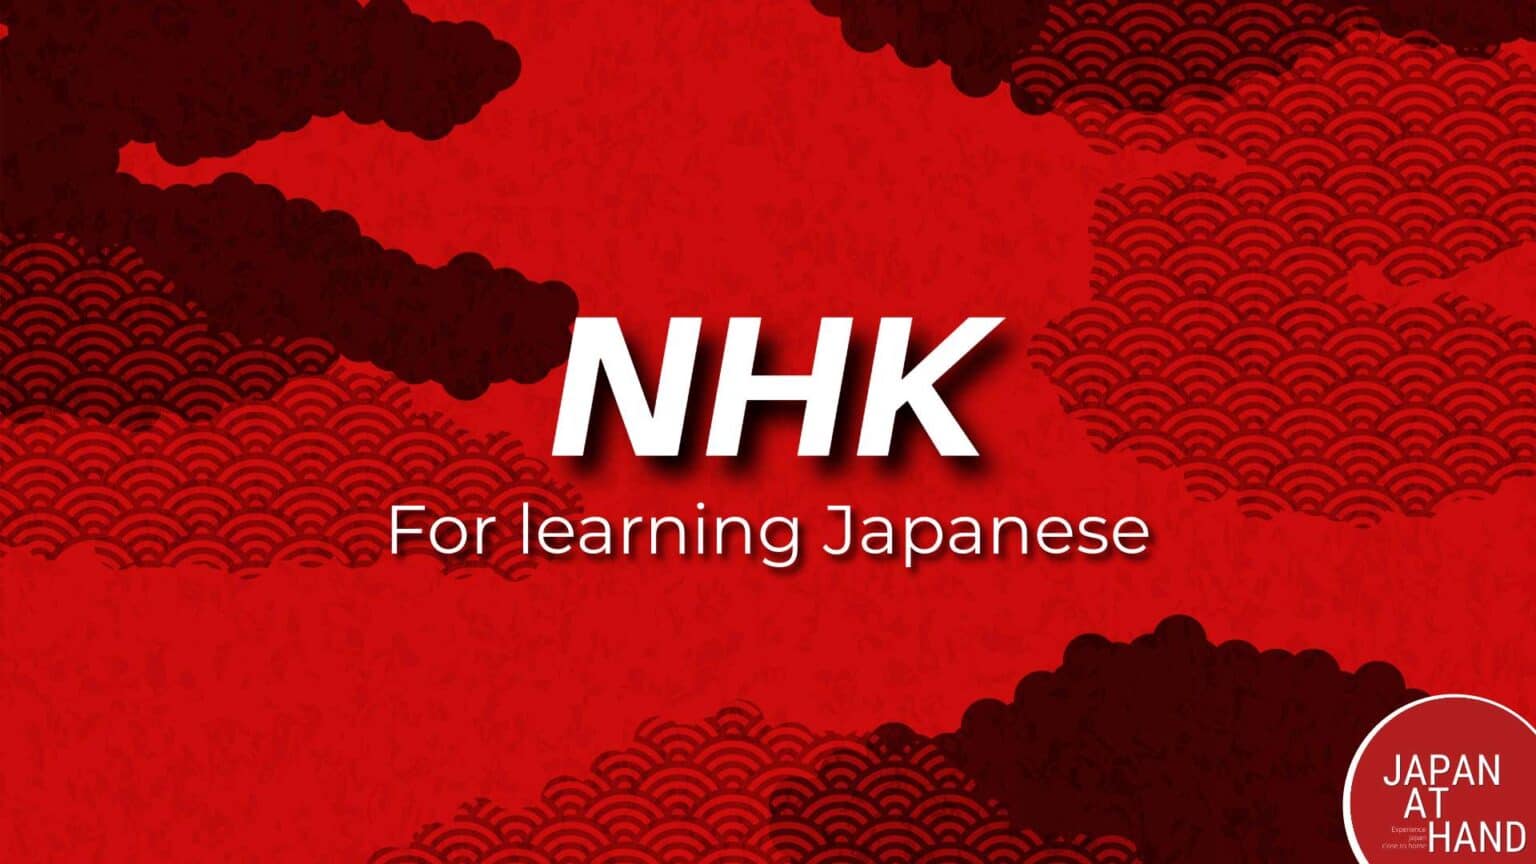 NHK featured